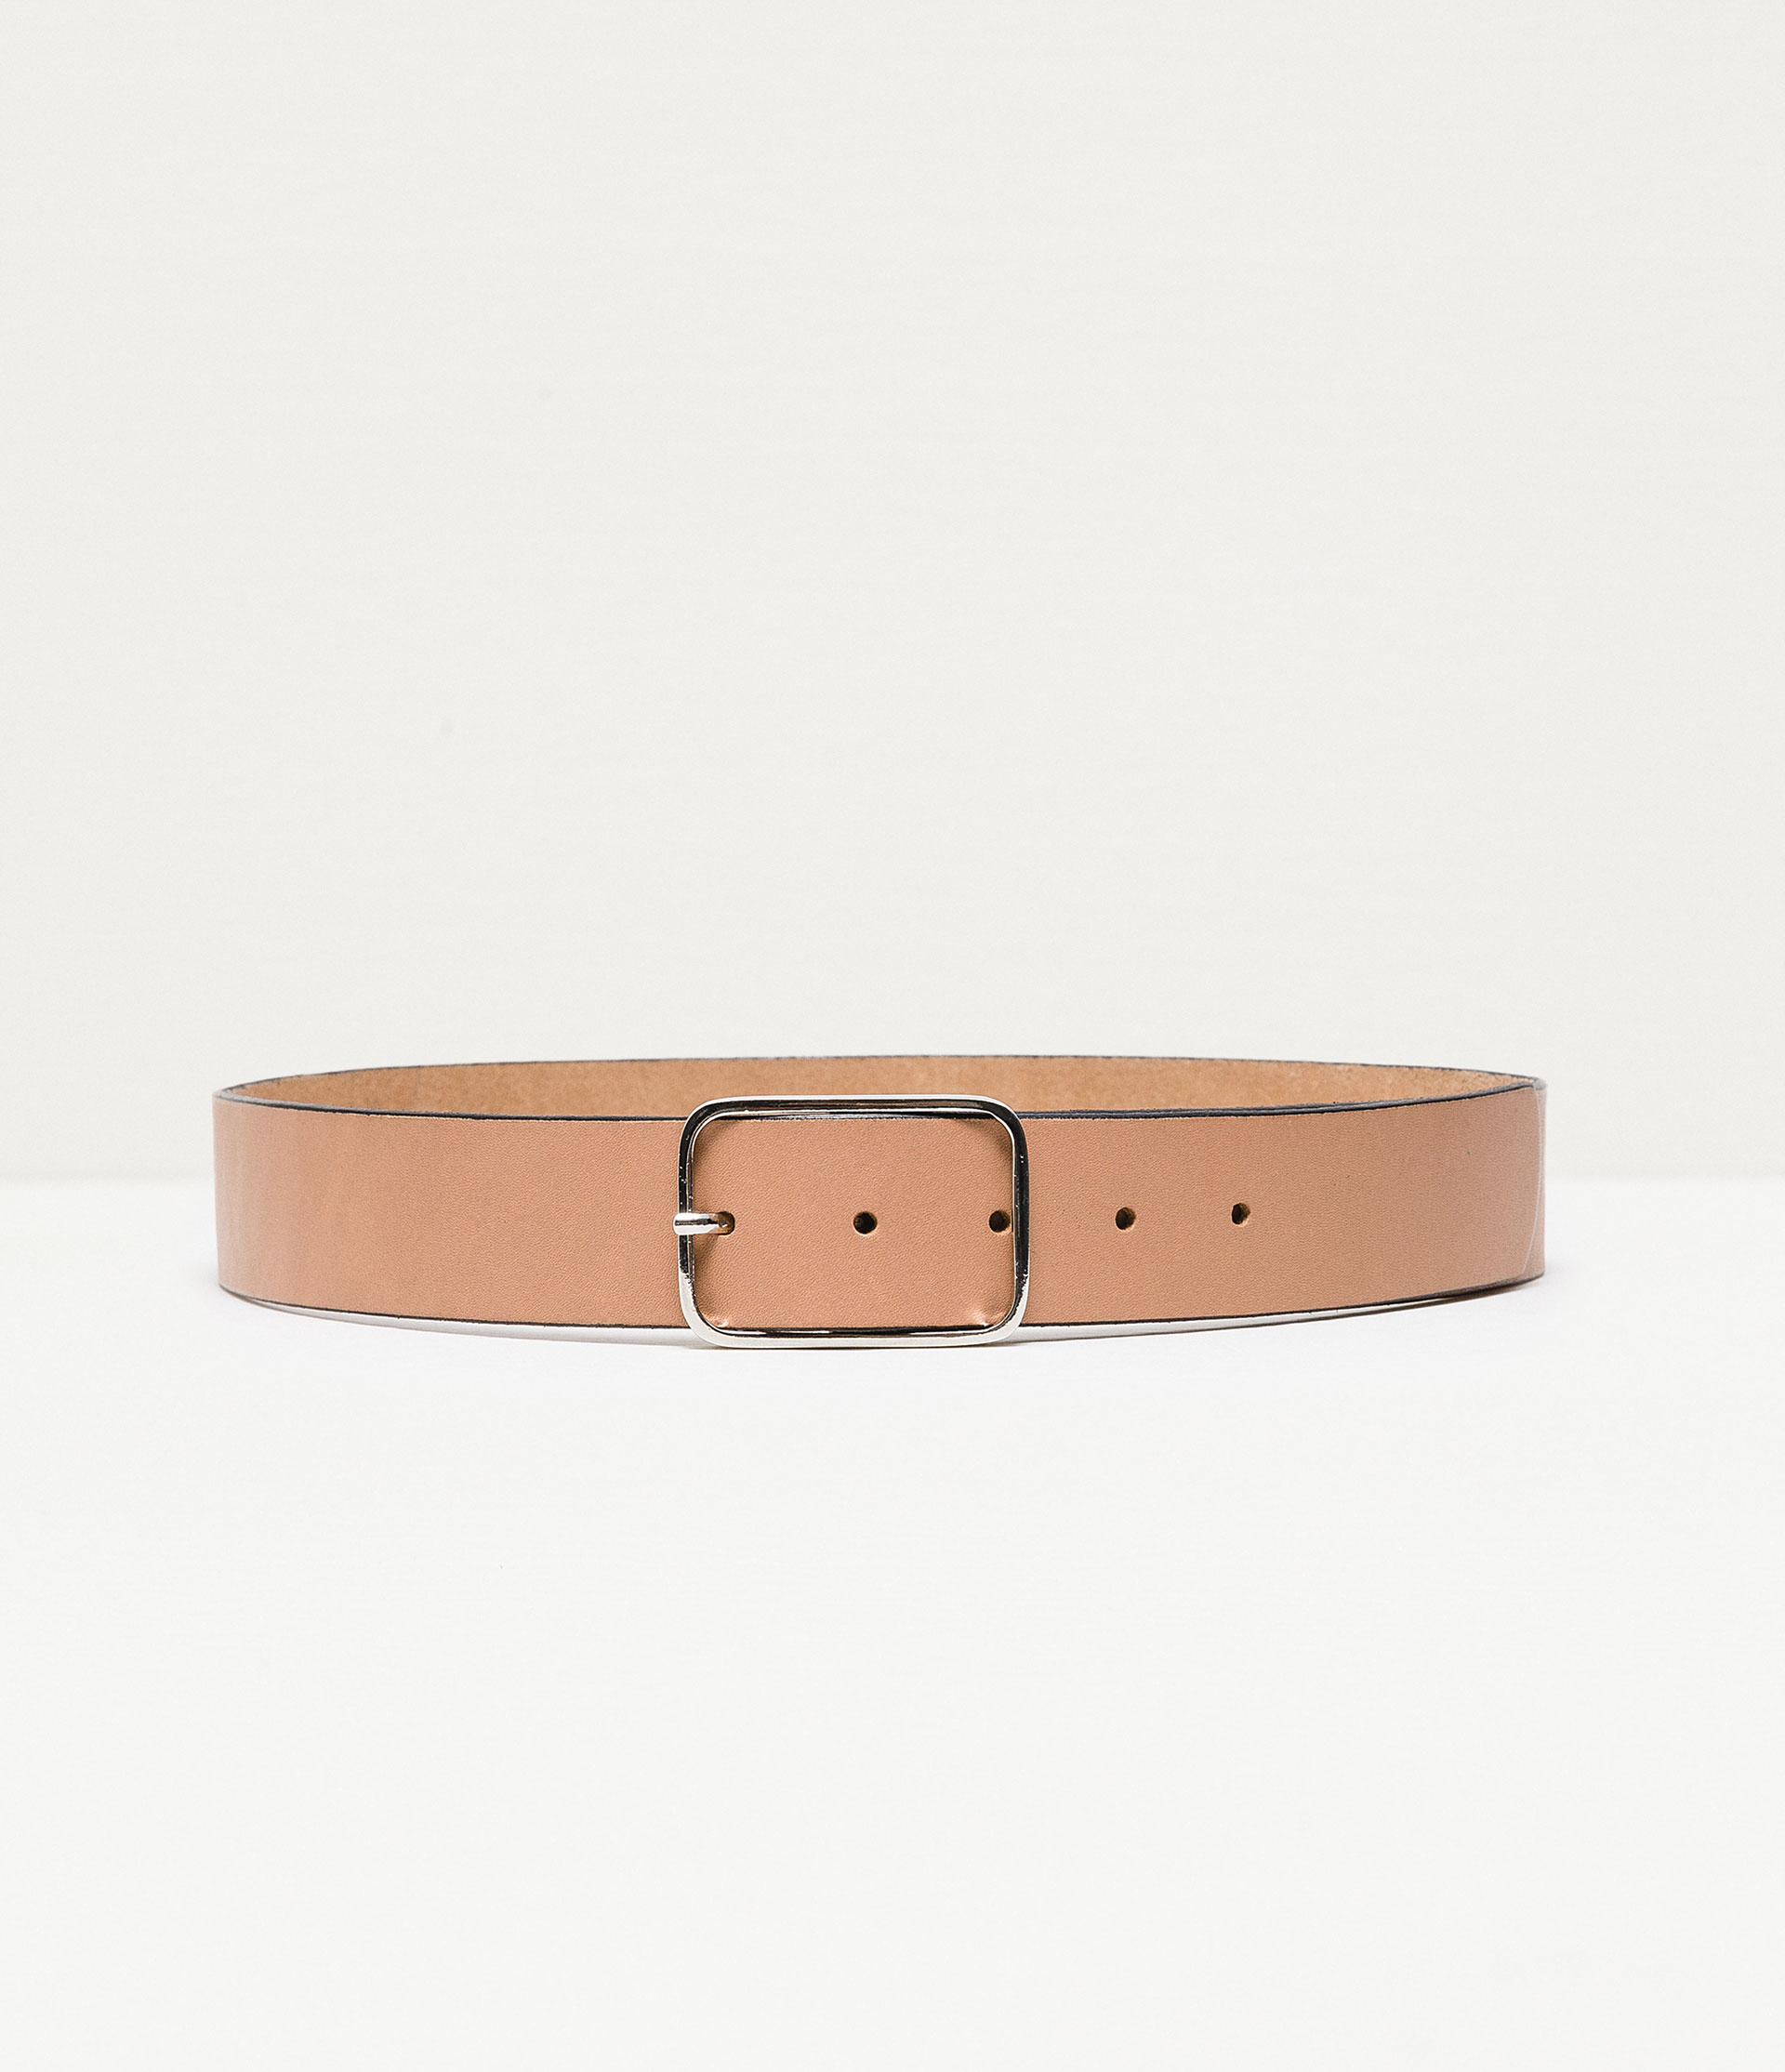 Zara Long Buckled Belt in Natural | Lyst